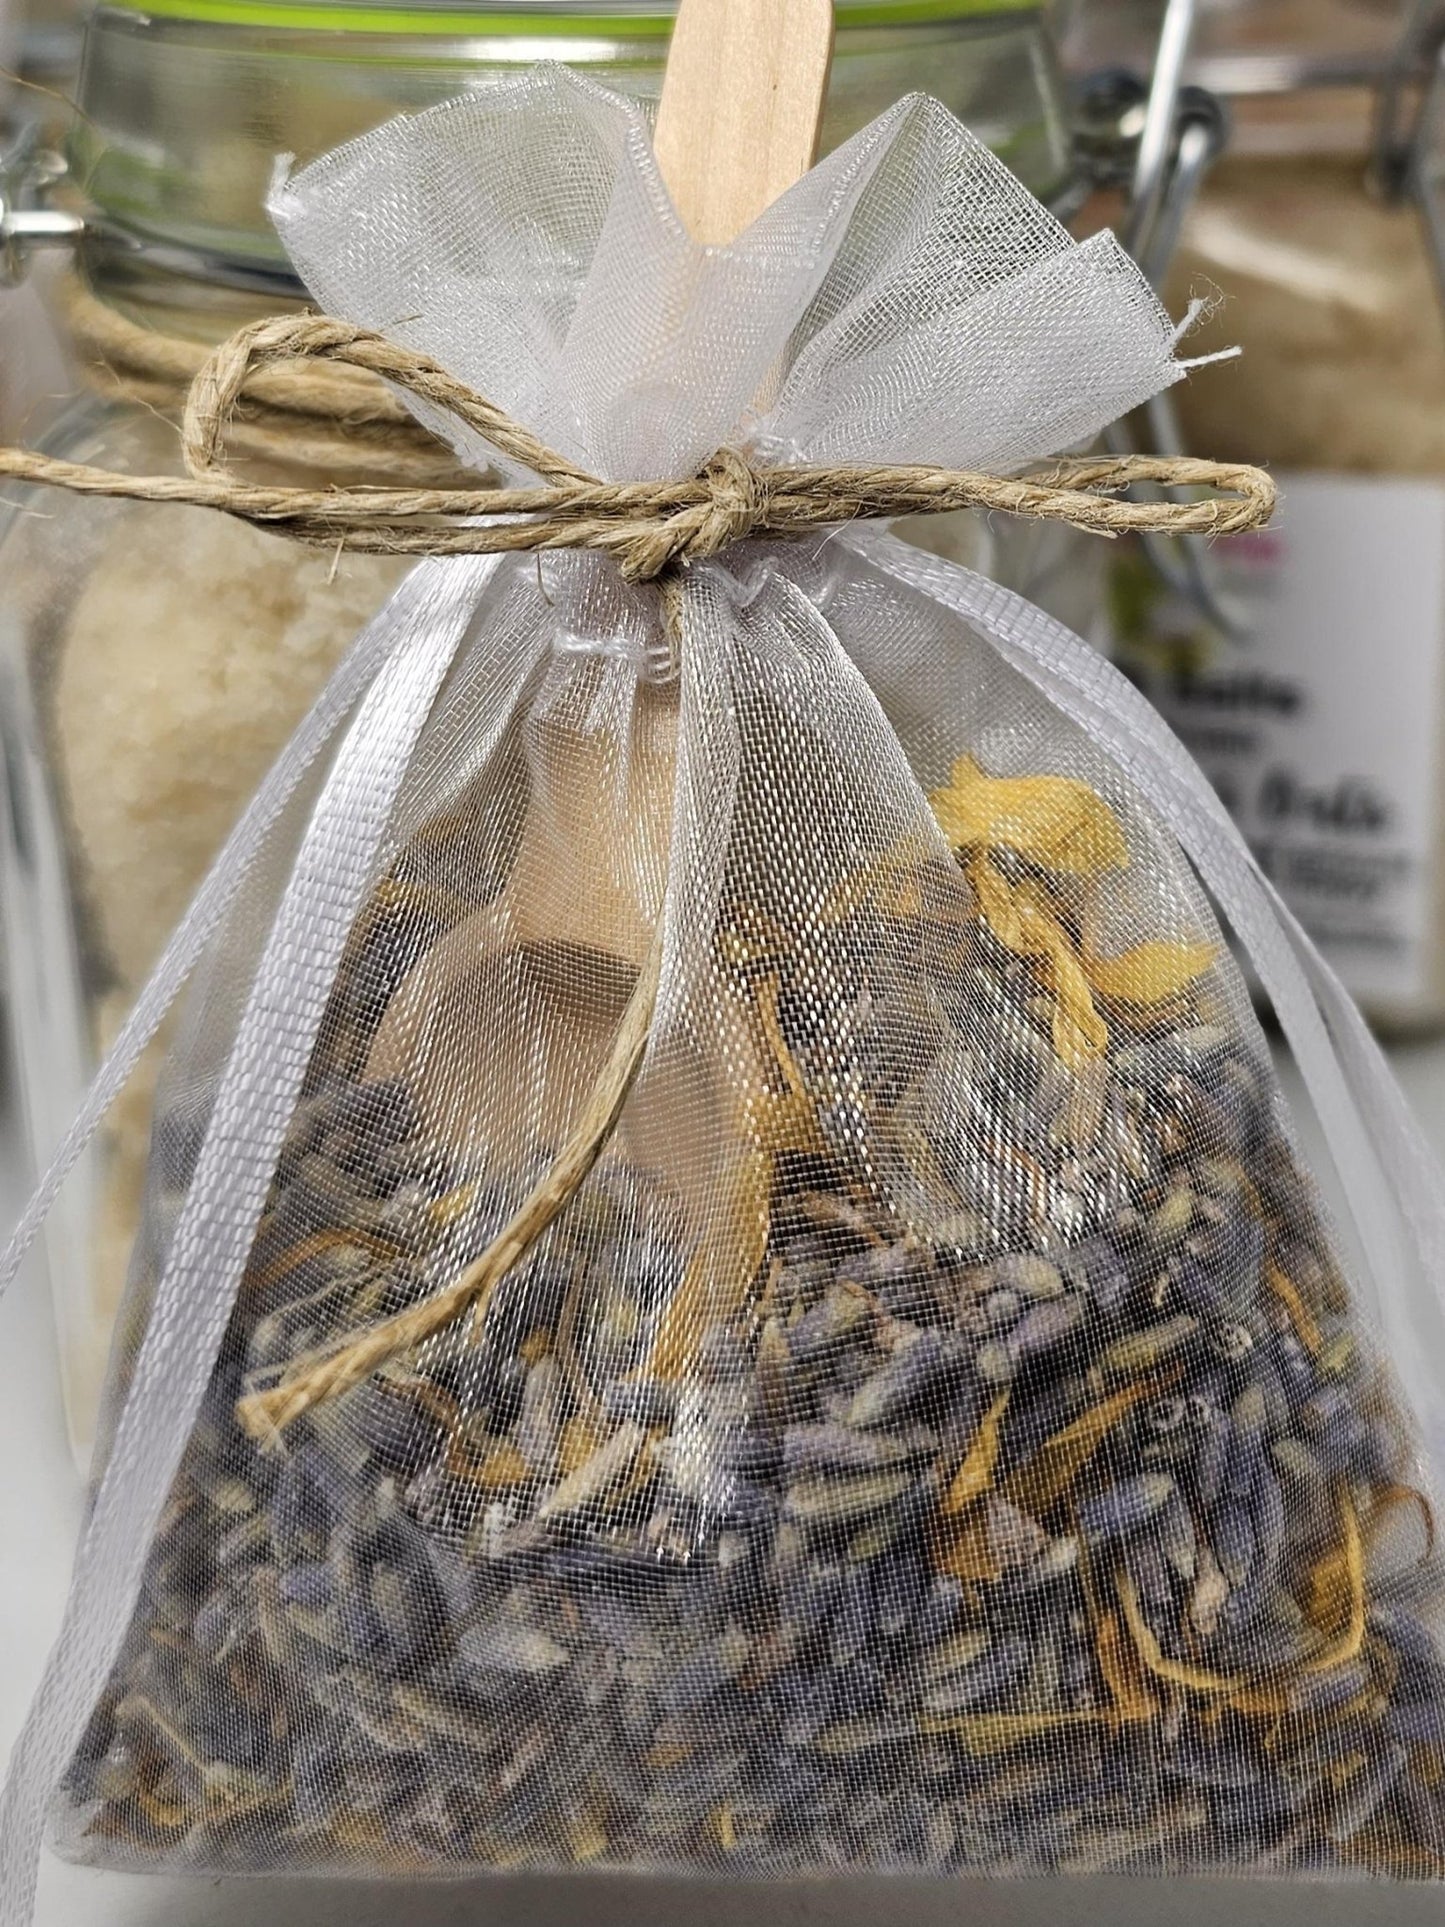 Lavender and Oats Bath Salts - FostersFieldssoap#soycandles#fostersfields#handmadesoap#natural soapbath saltsLavender and Oats Bath Salts